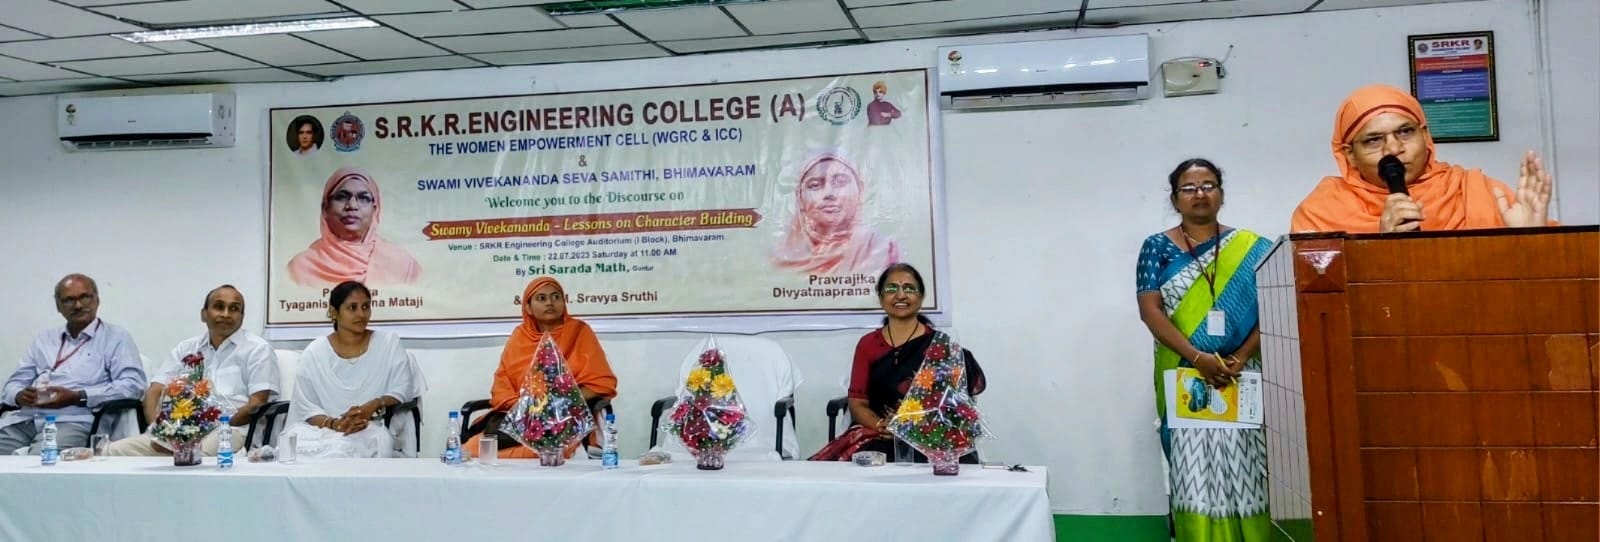 Yaswanth Majji - SRKR Engineering College - Bhimavaram, Andhra Pradesh,  India | LinkedIn